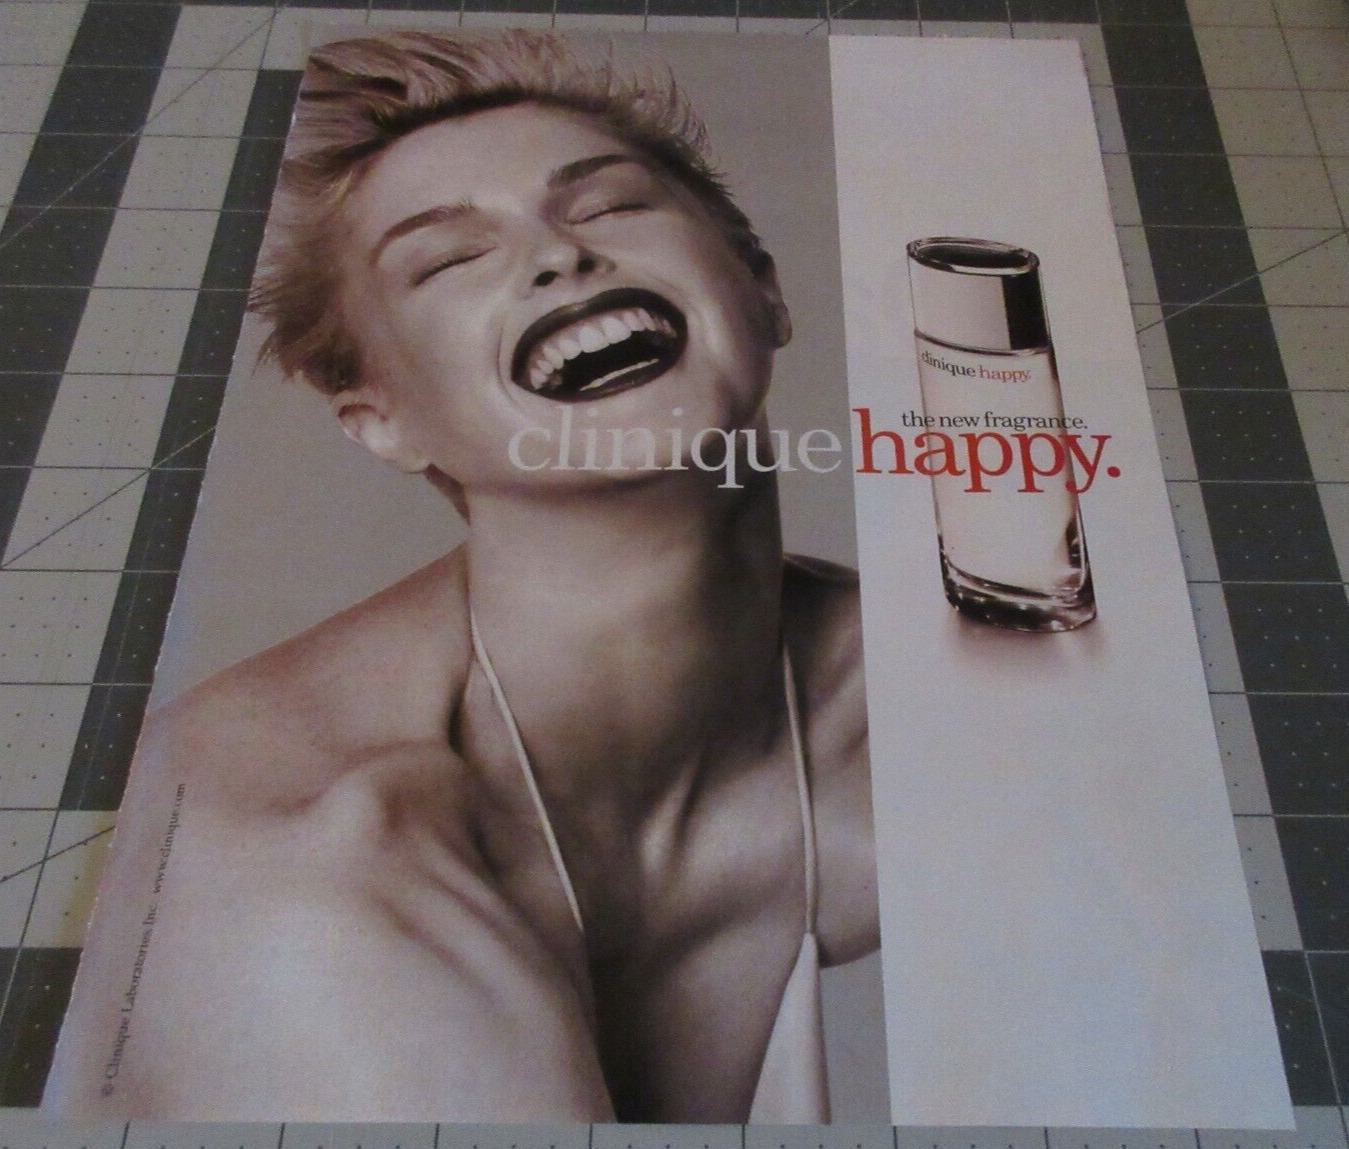 1997 Clinique Happy Fragrance, Vintage Print AD